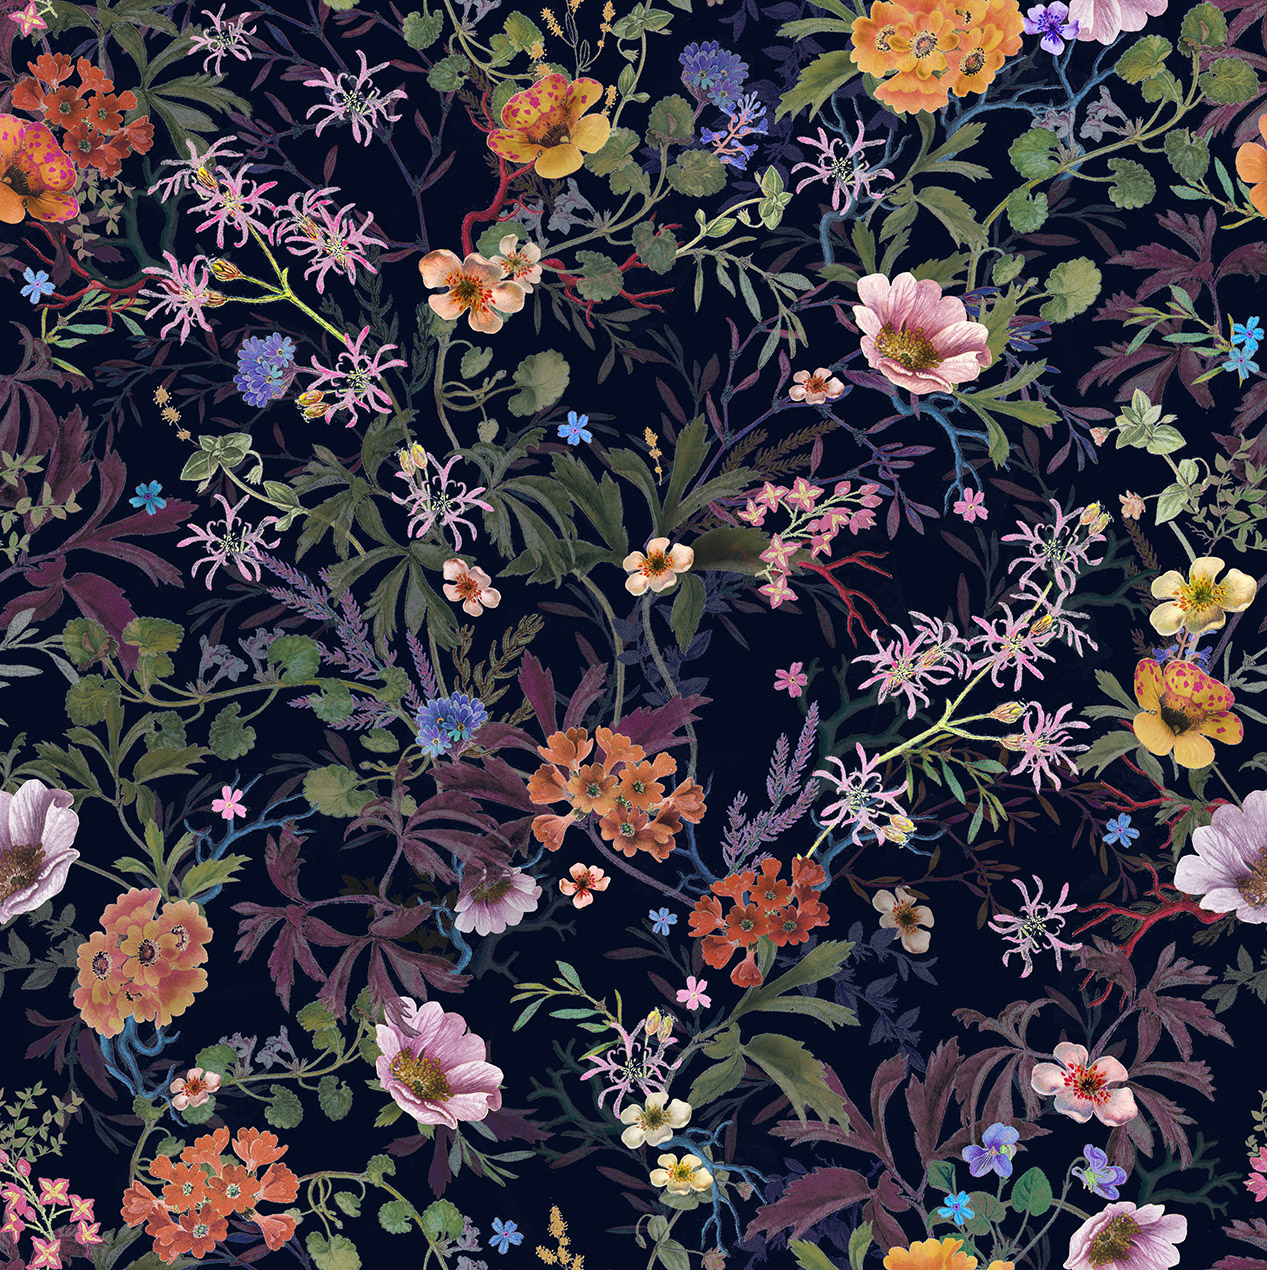 Dark winter botanical floral print for Fiorelli, by Em Prové